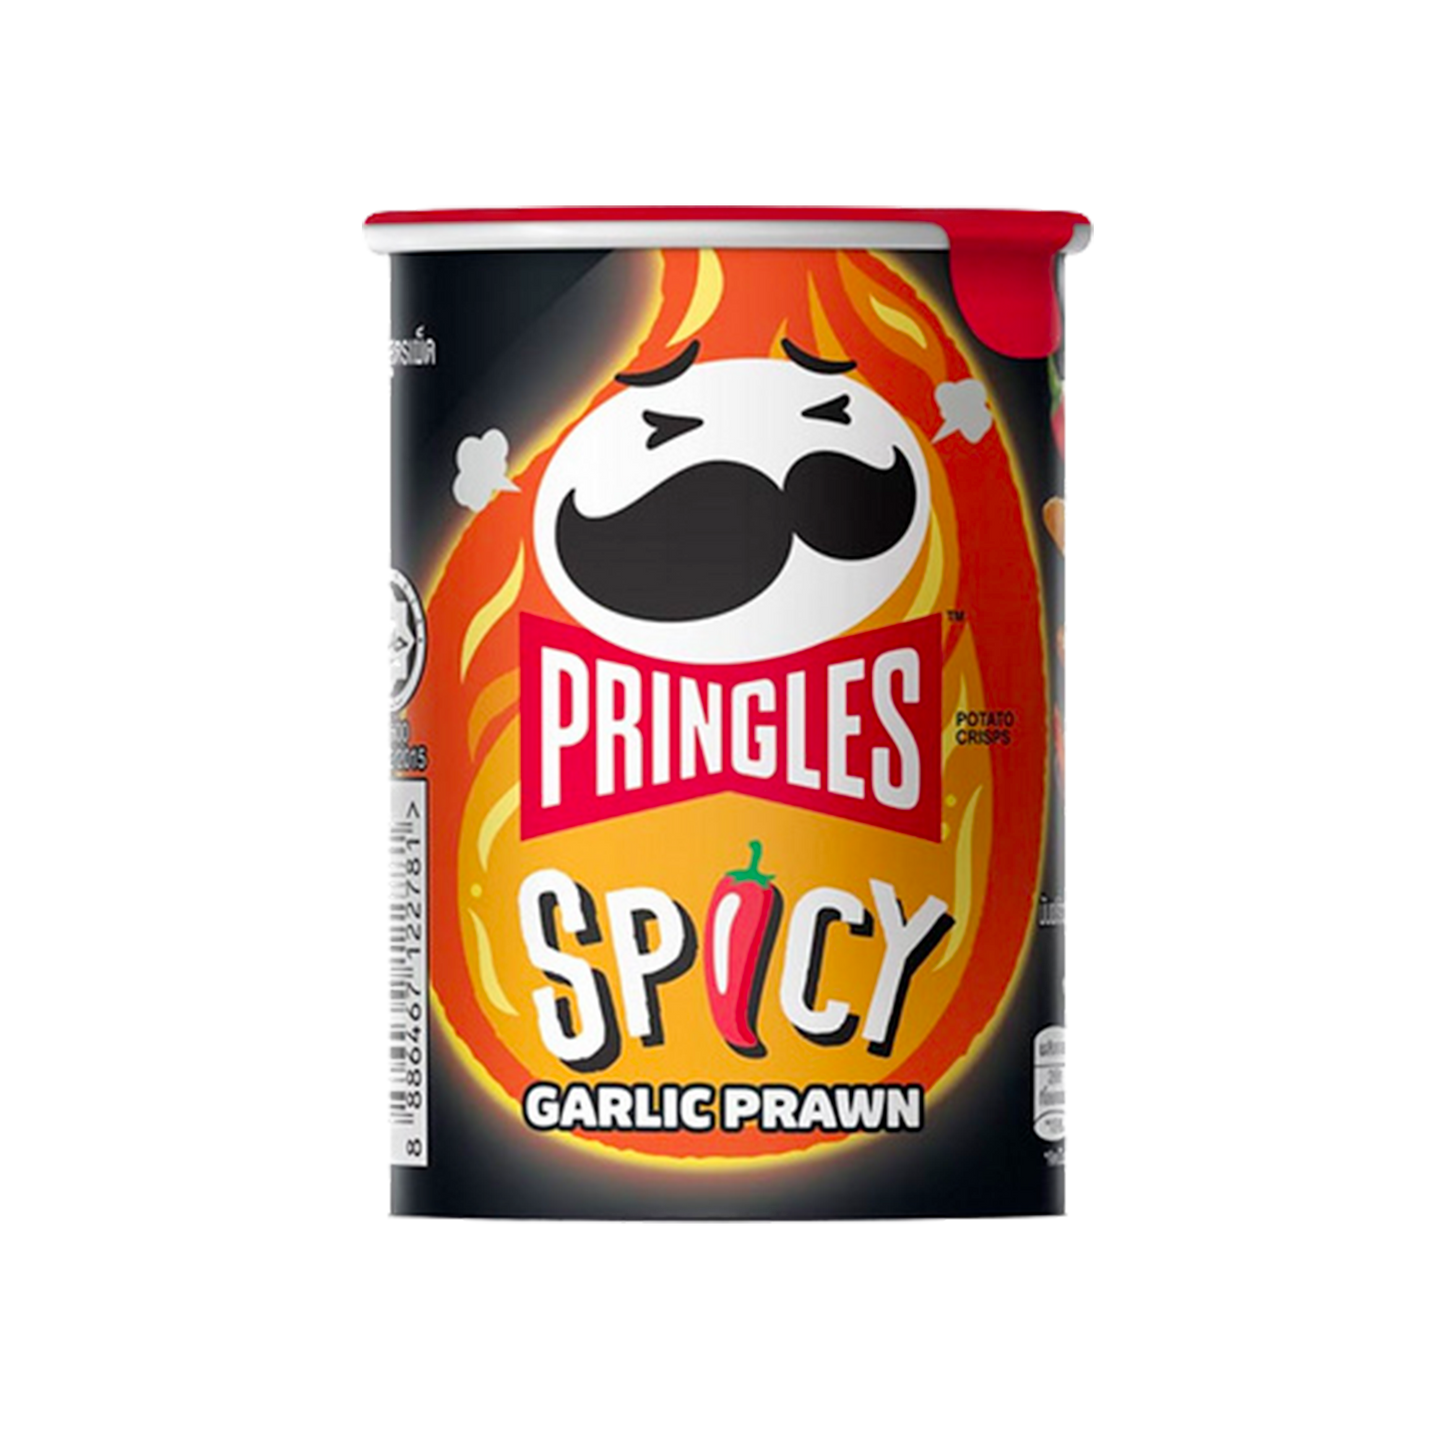 Pringles Spicy Garlic Prawn 42g